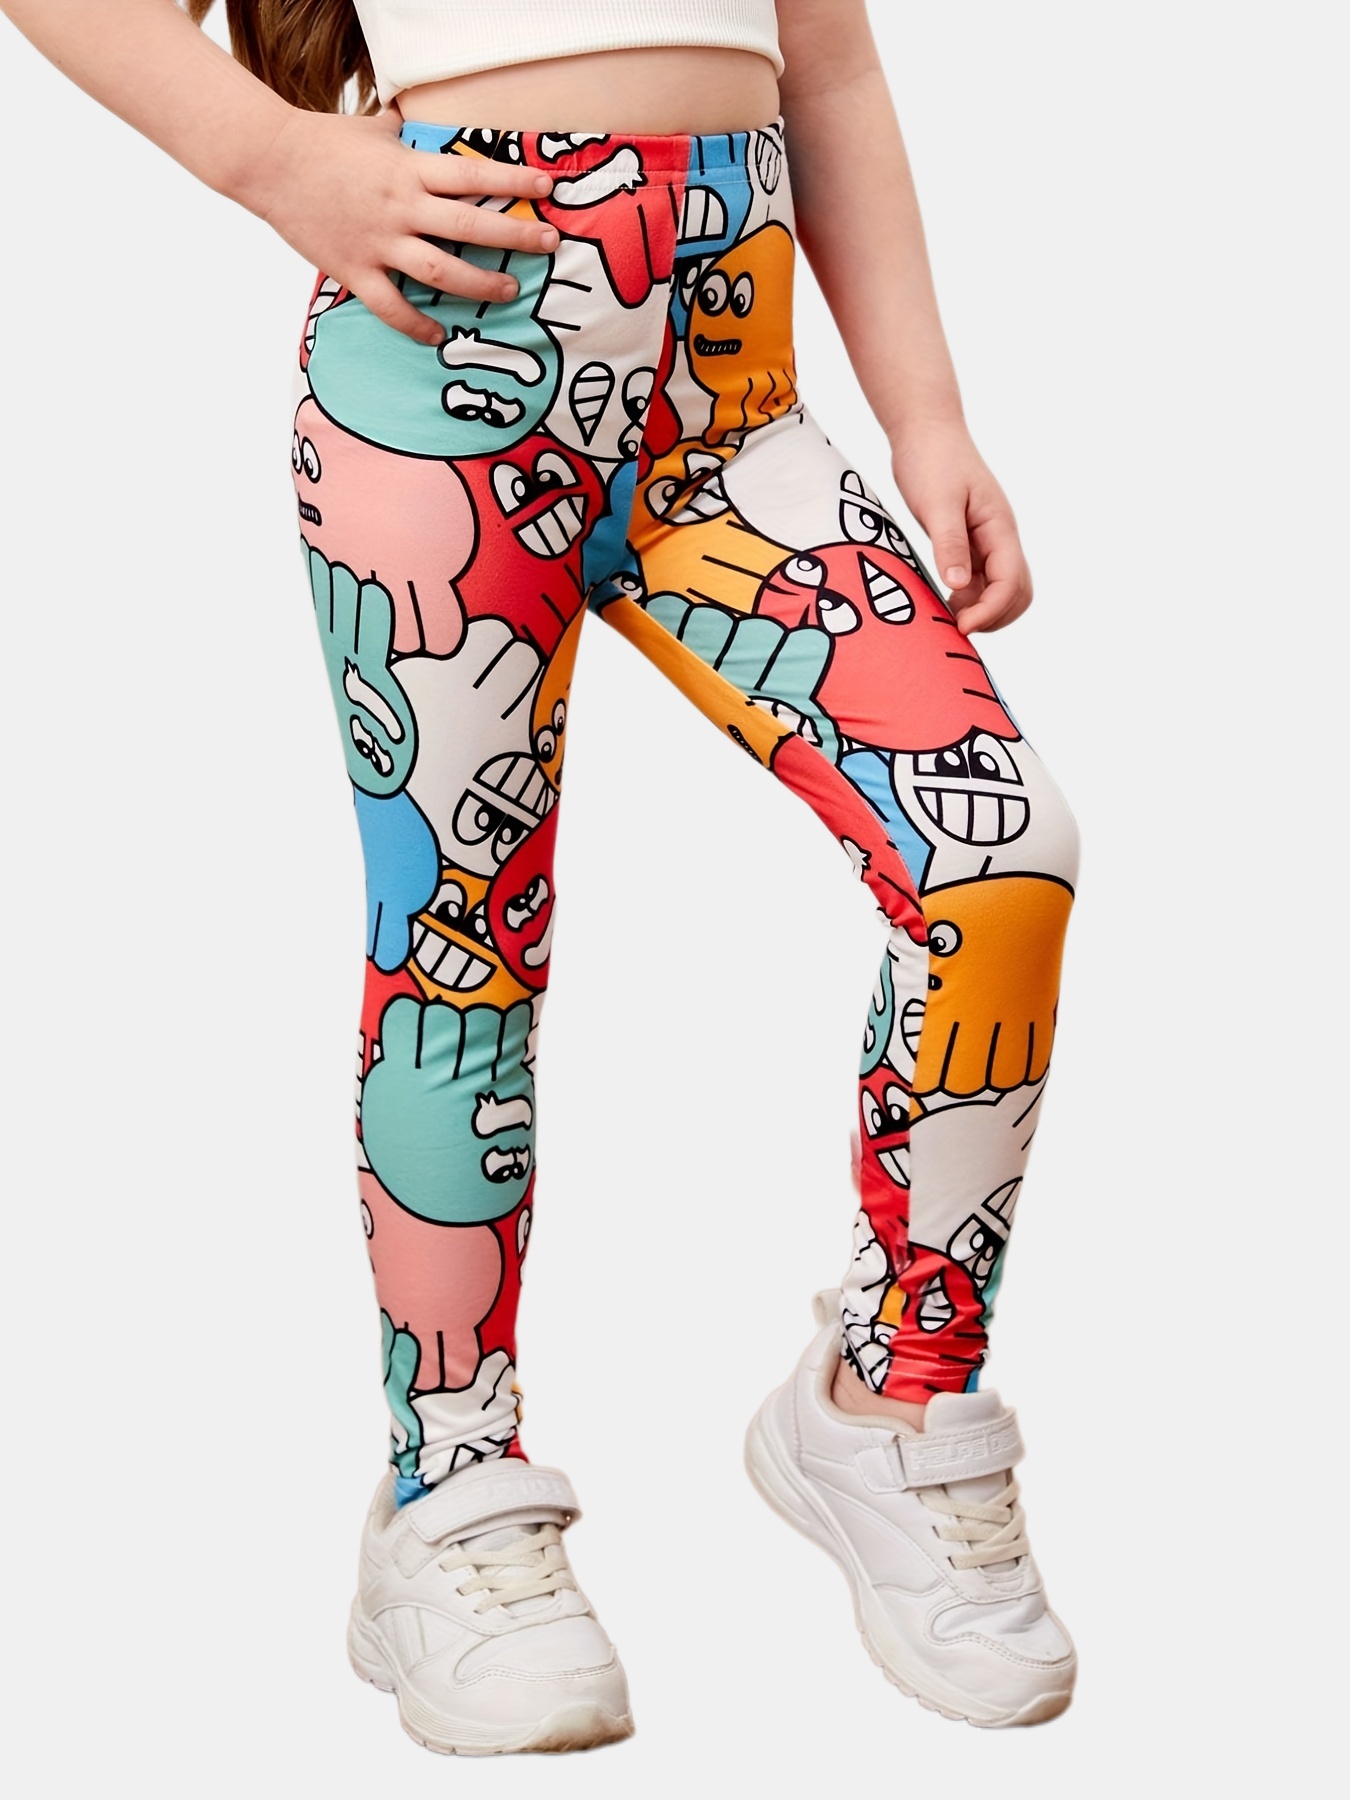 Anime Leggings, Cartoon Yoga Pant, Dance Legging, Flower Printed